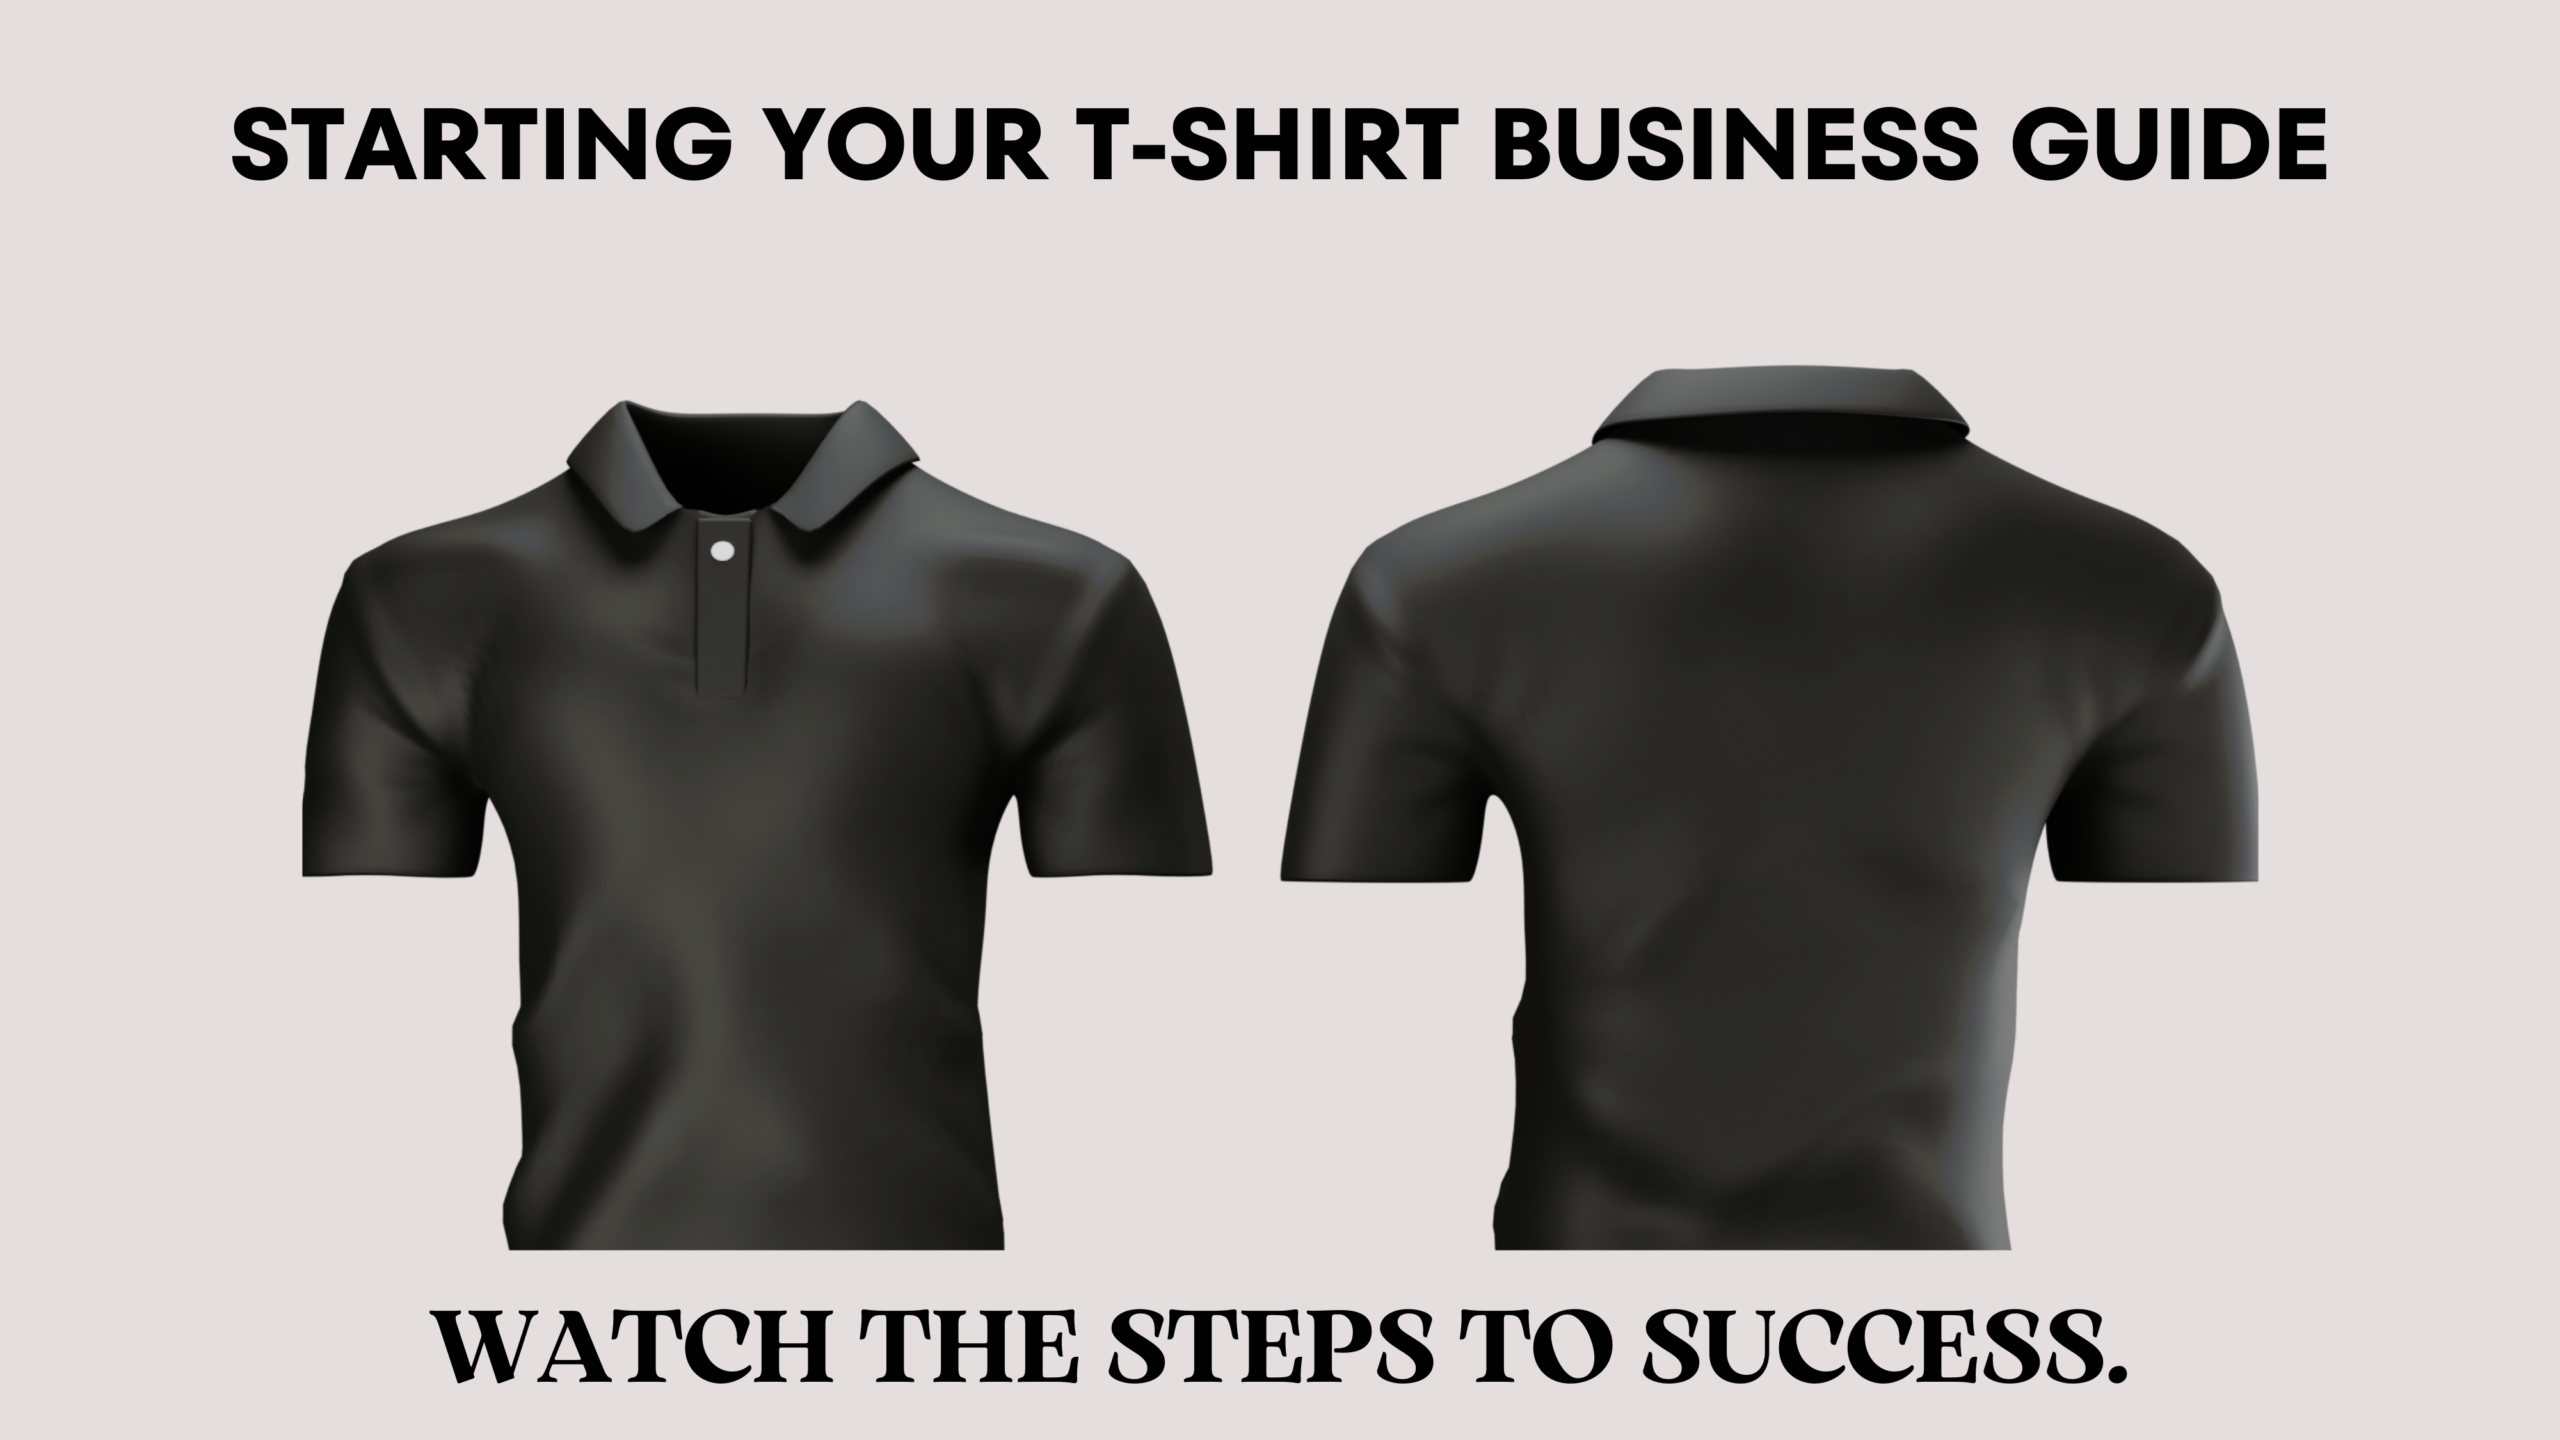 How to Start a T-Shirt Business